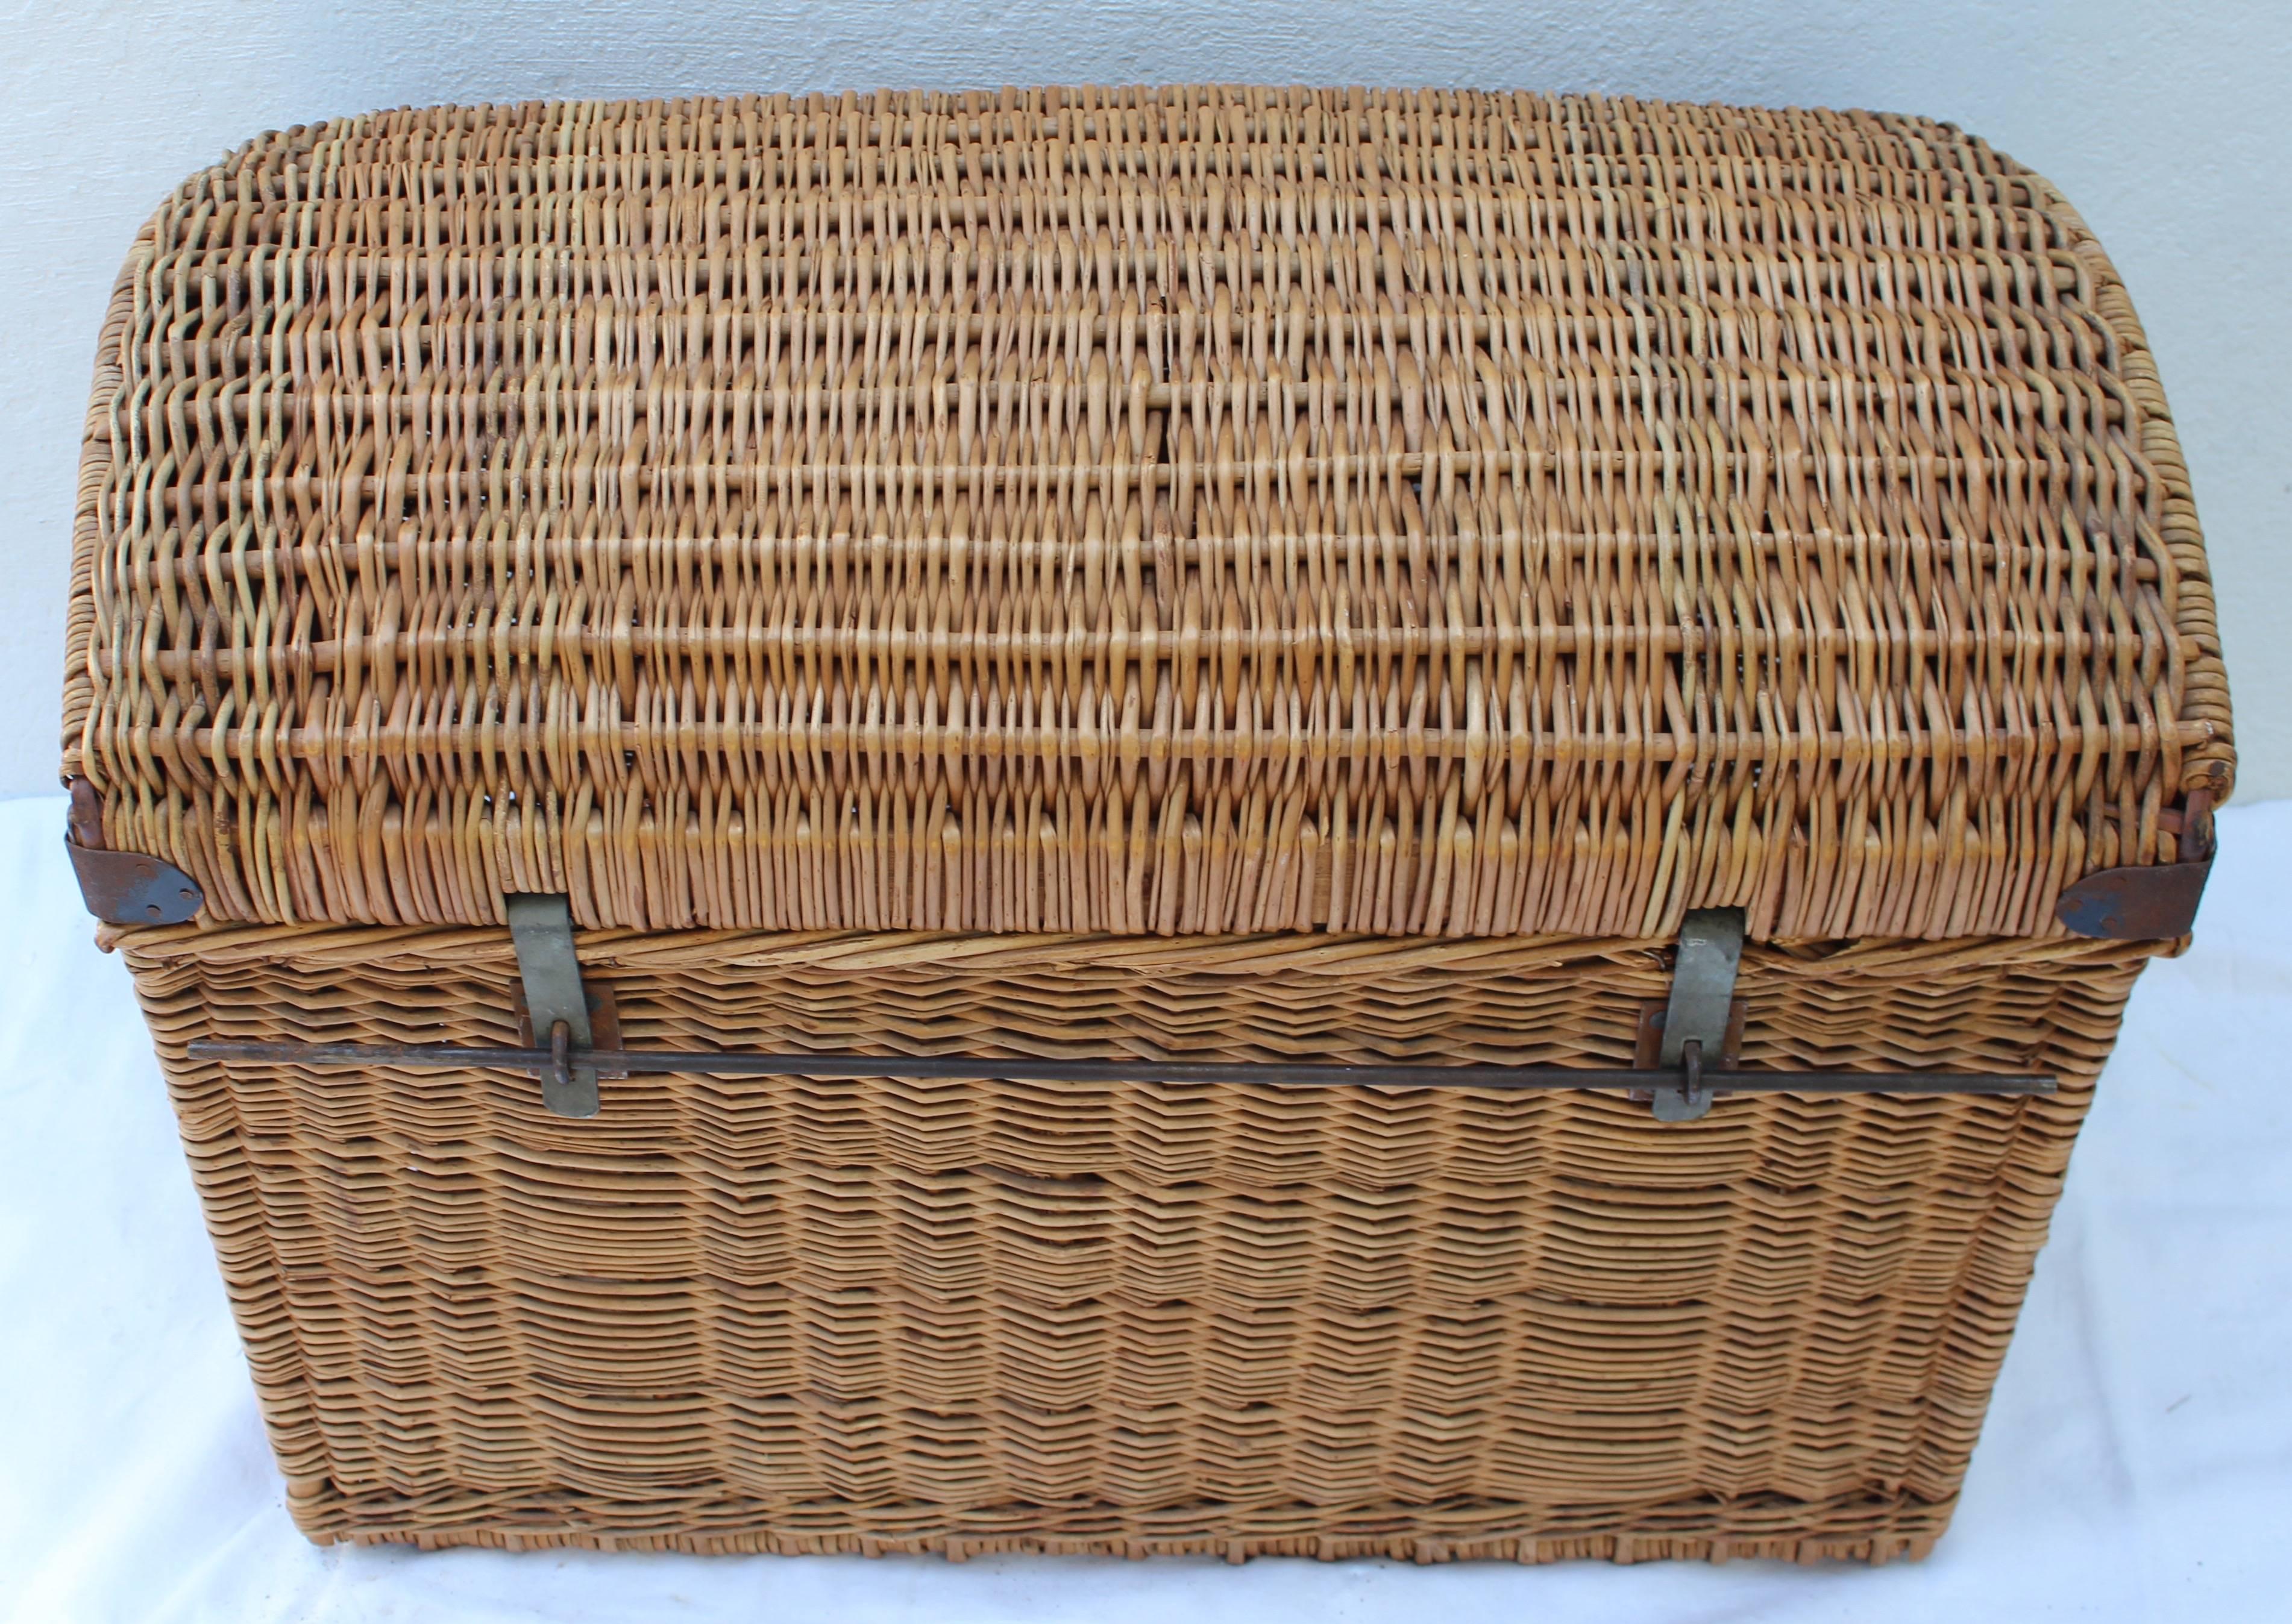 Large wicker basket, trunk or hamper.